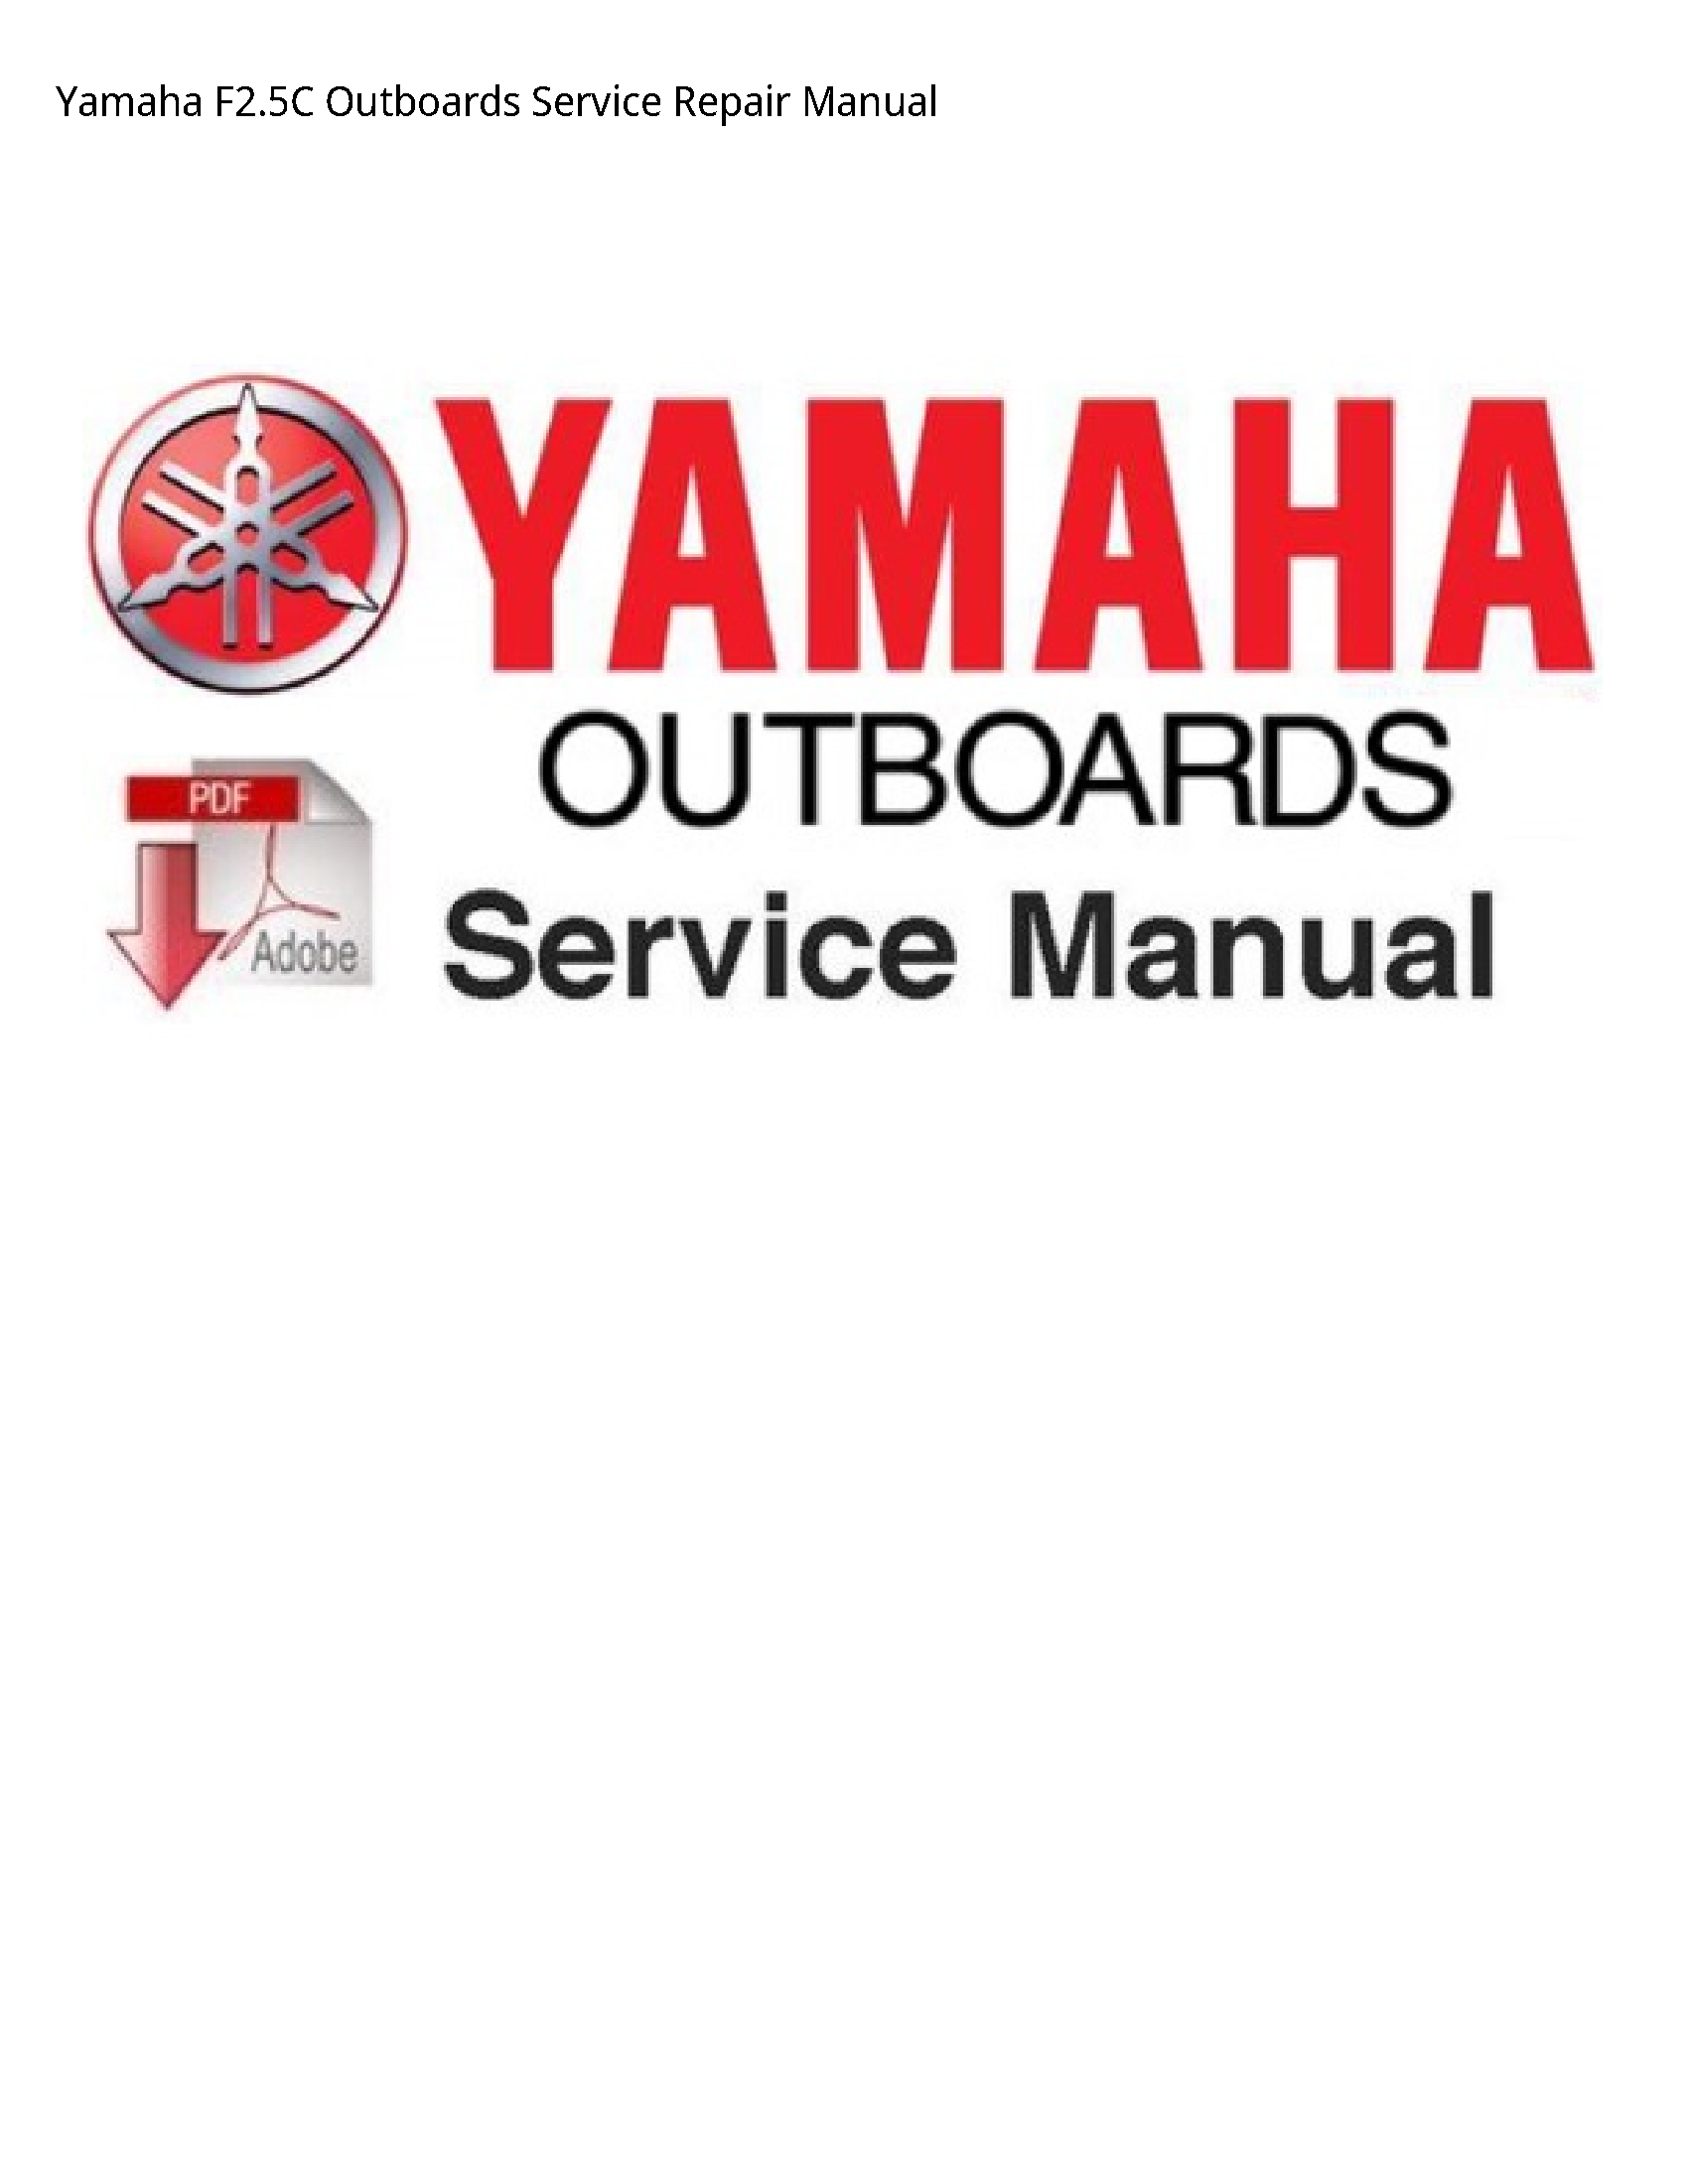 Yamaha F2.5C Outboards manual